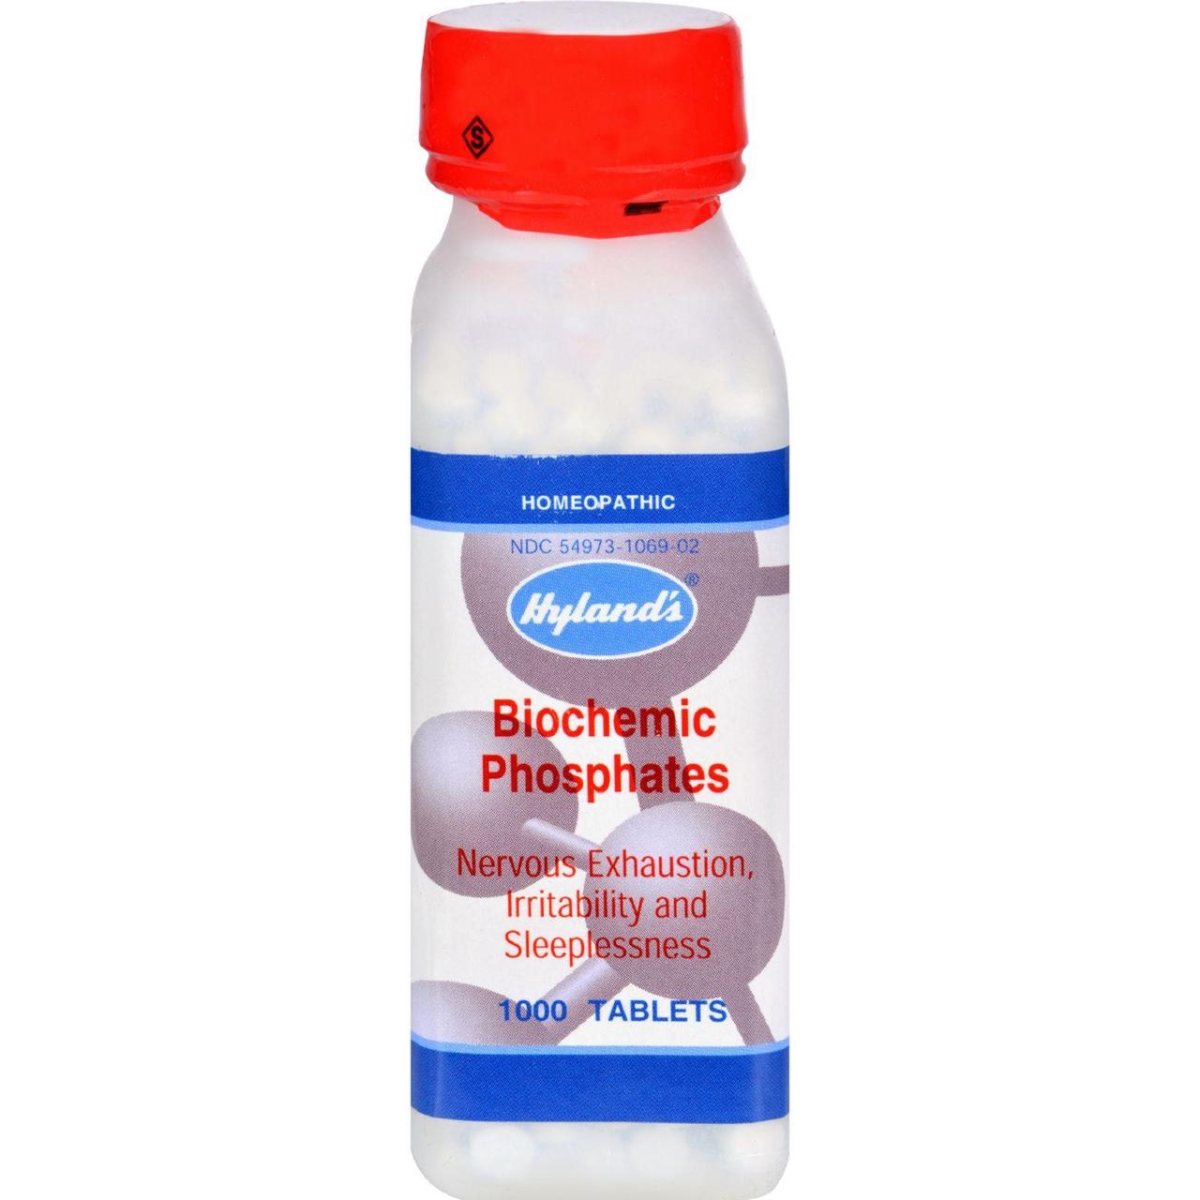 Hg0485615 Biochemic Phosphates - 1000 Tablets